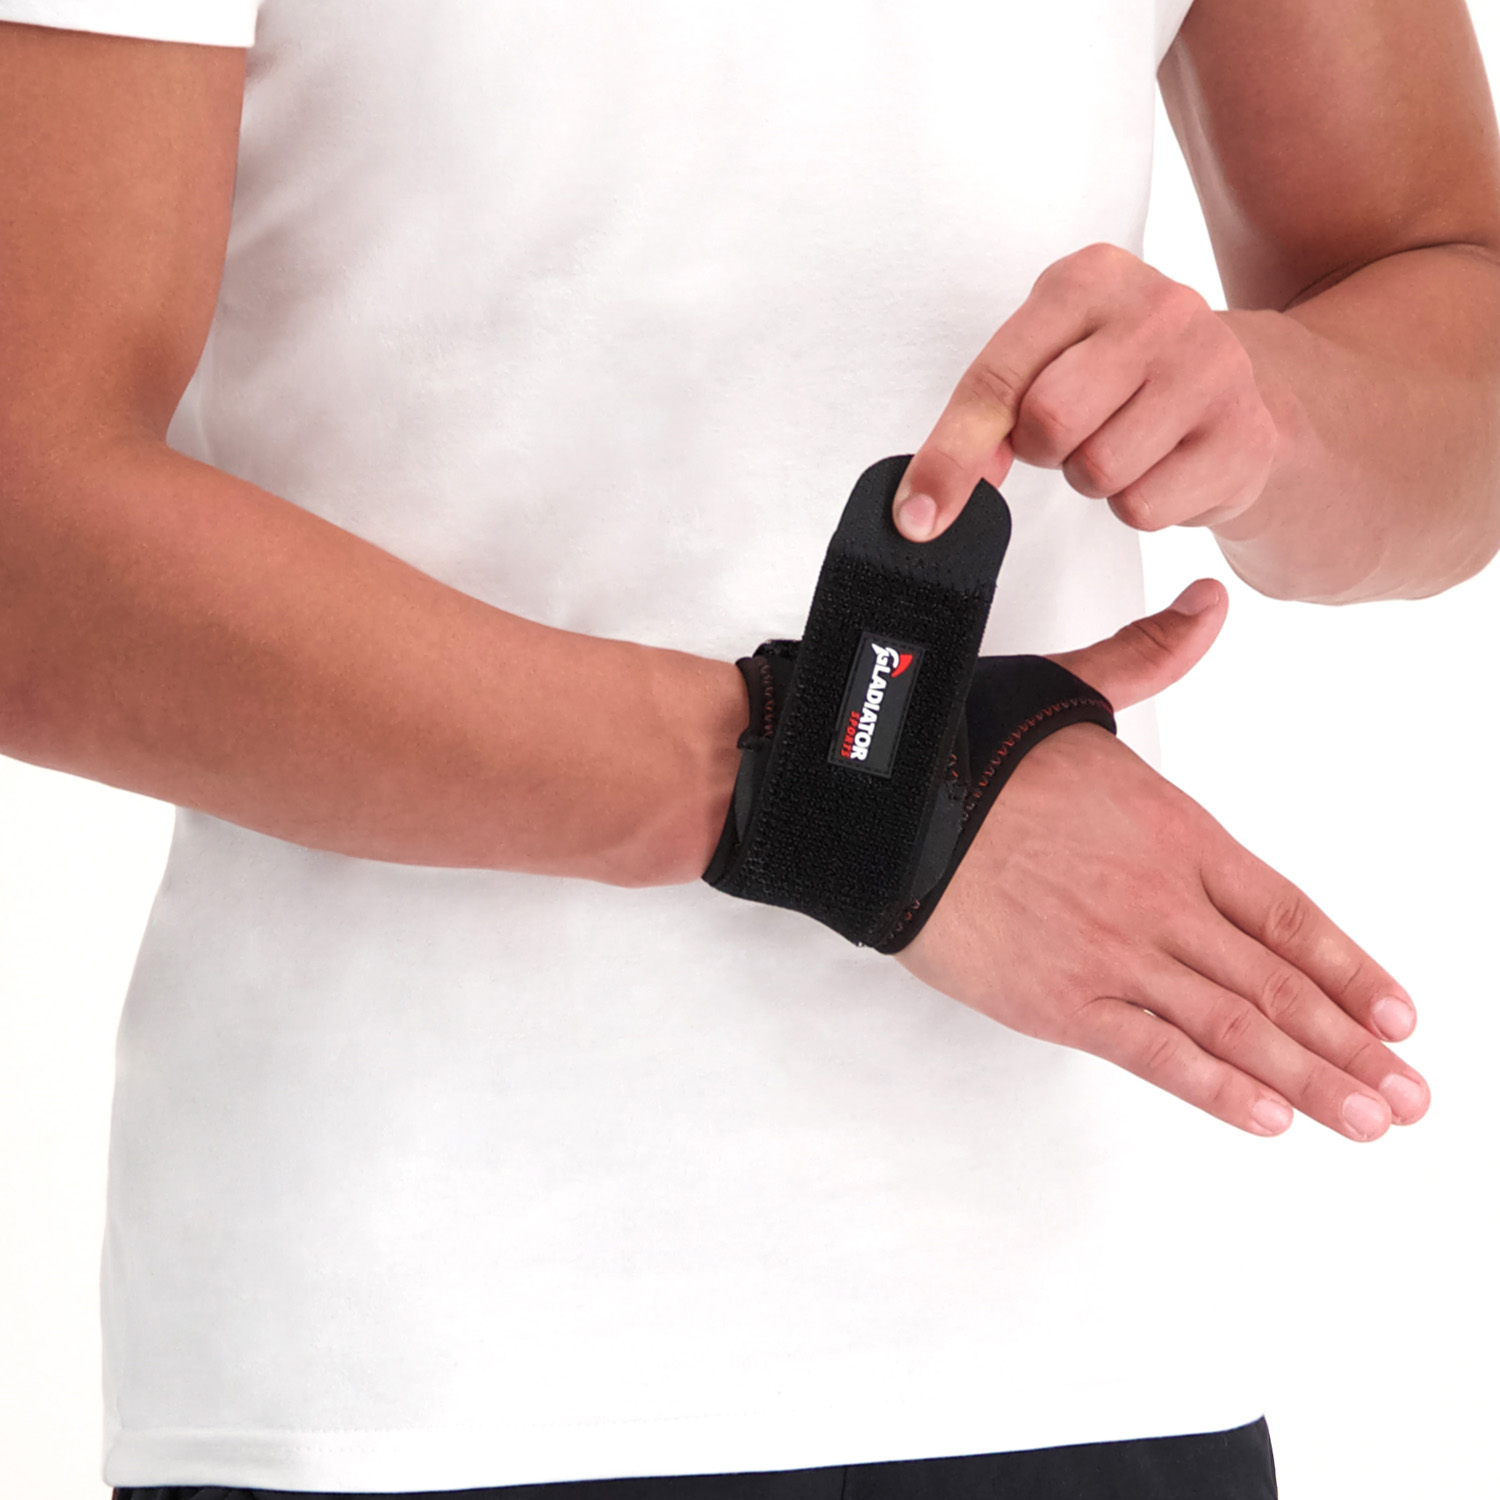 Gladiator Sports Wrist brace / Wrist support